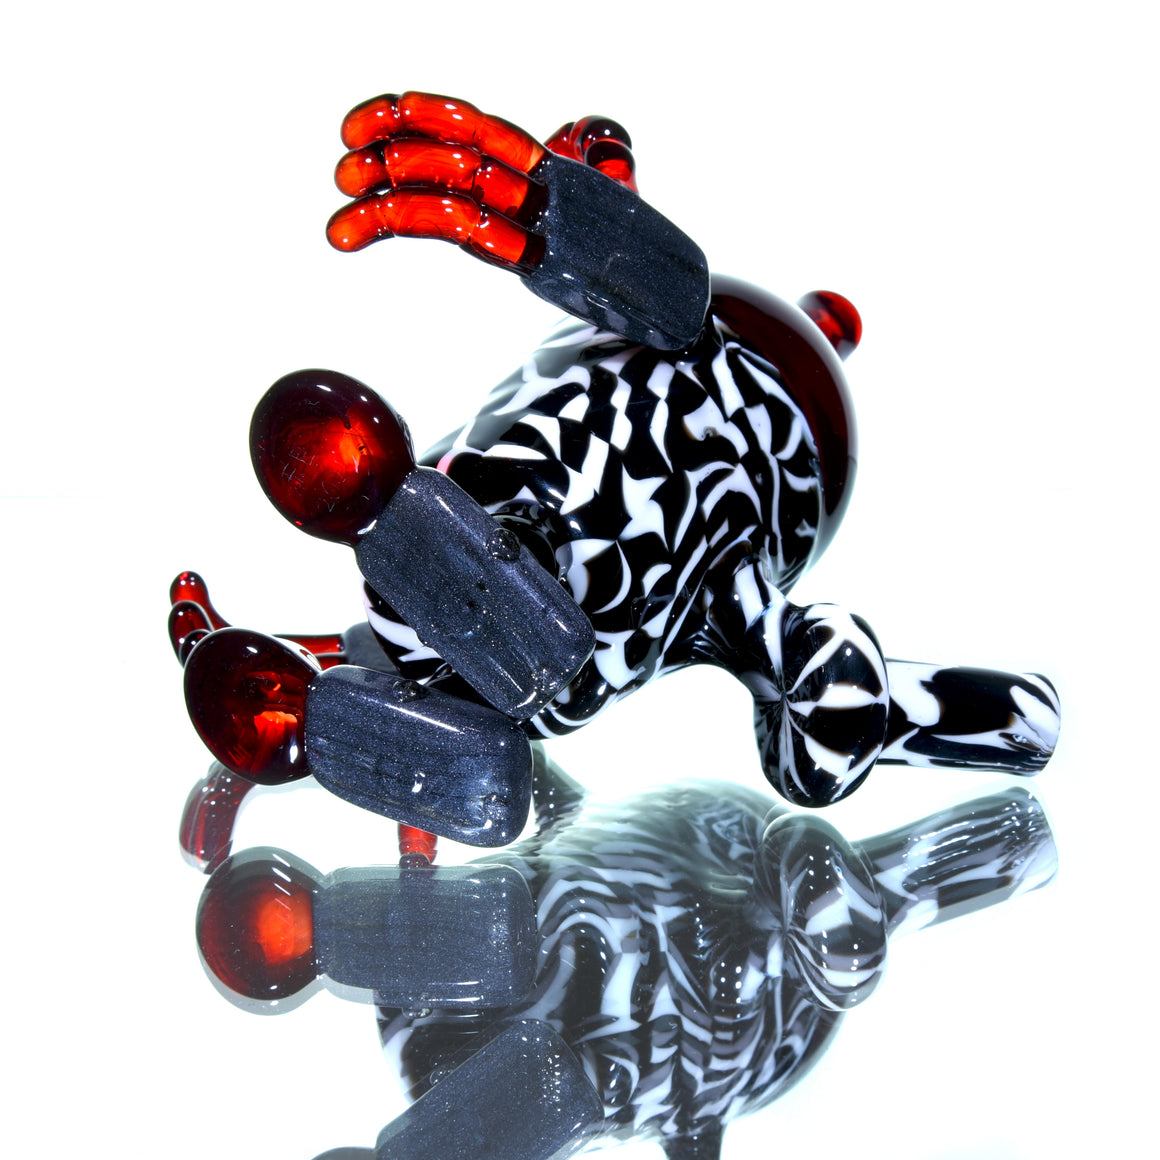 Fully-worked Robo-kun w/ Matching Cap - Pomegranate/Black & White - 10mm Female